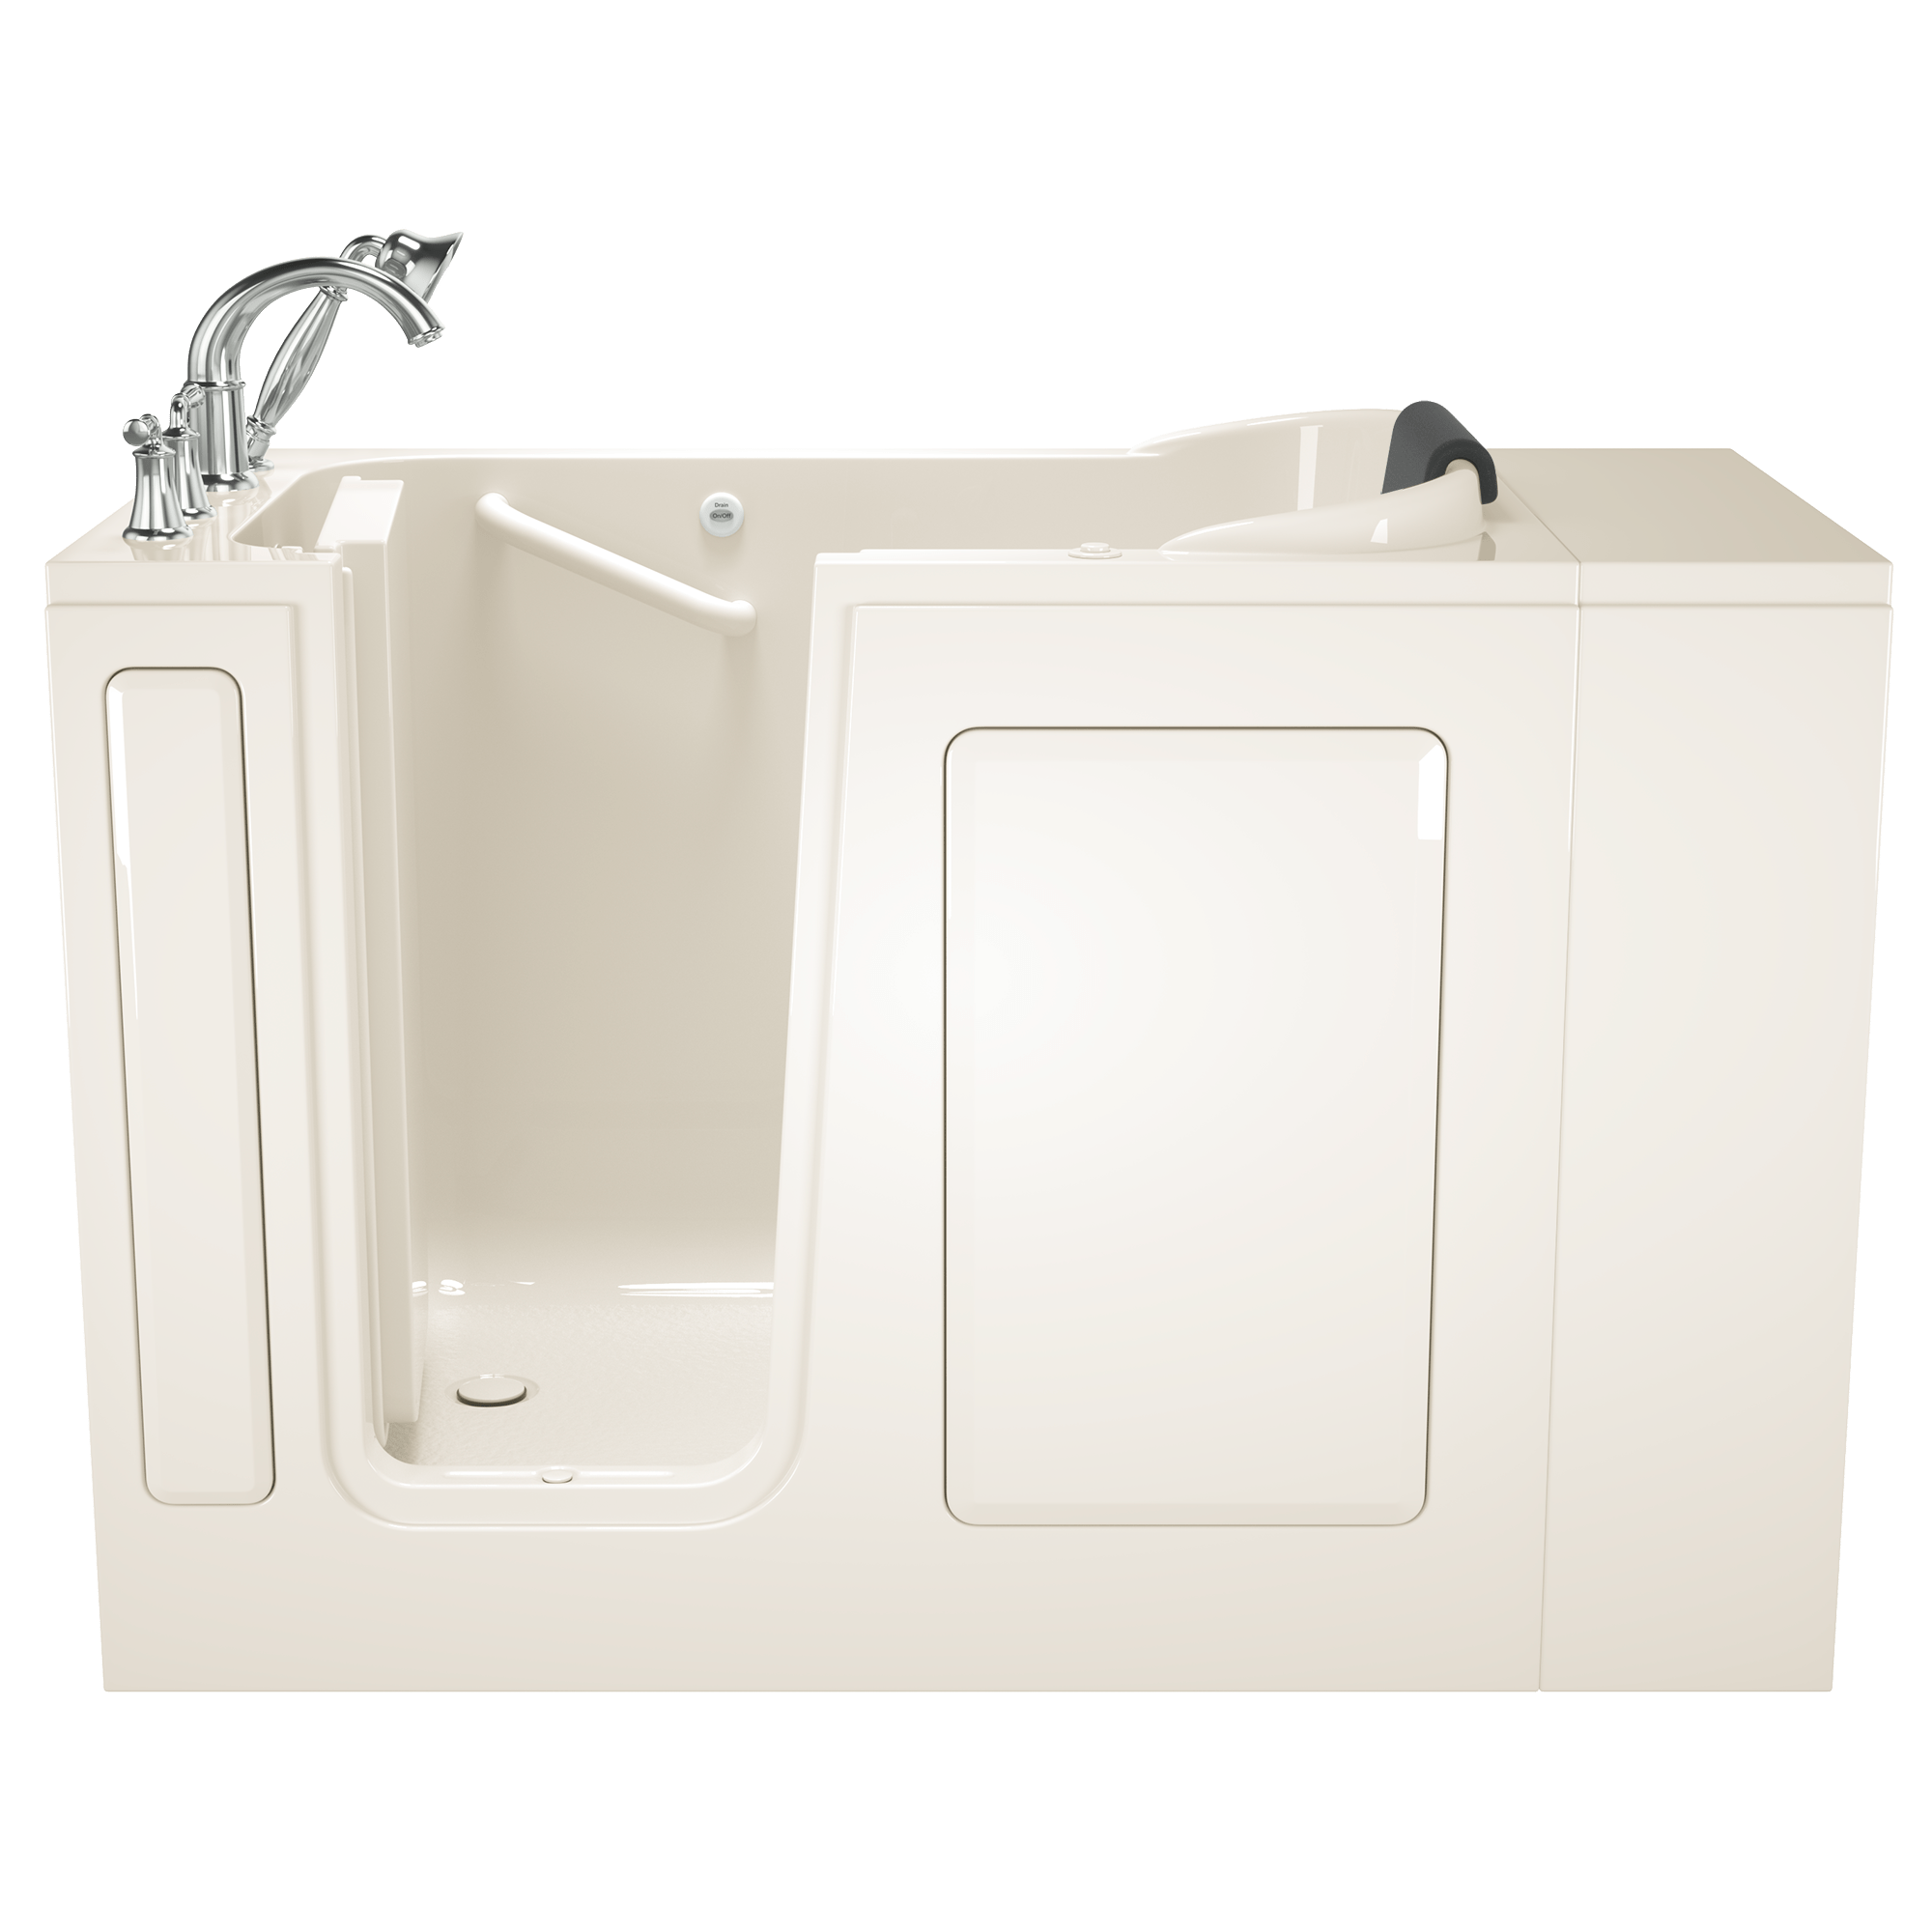 Gelcoat Premium Series 48x28 Inch Walk-In Bathtub with Jet Massage System - Left Hand Door and Drain